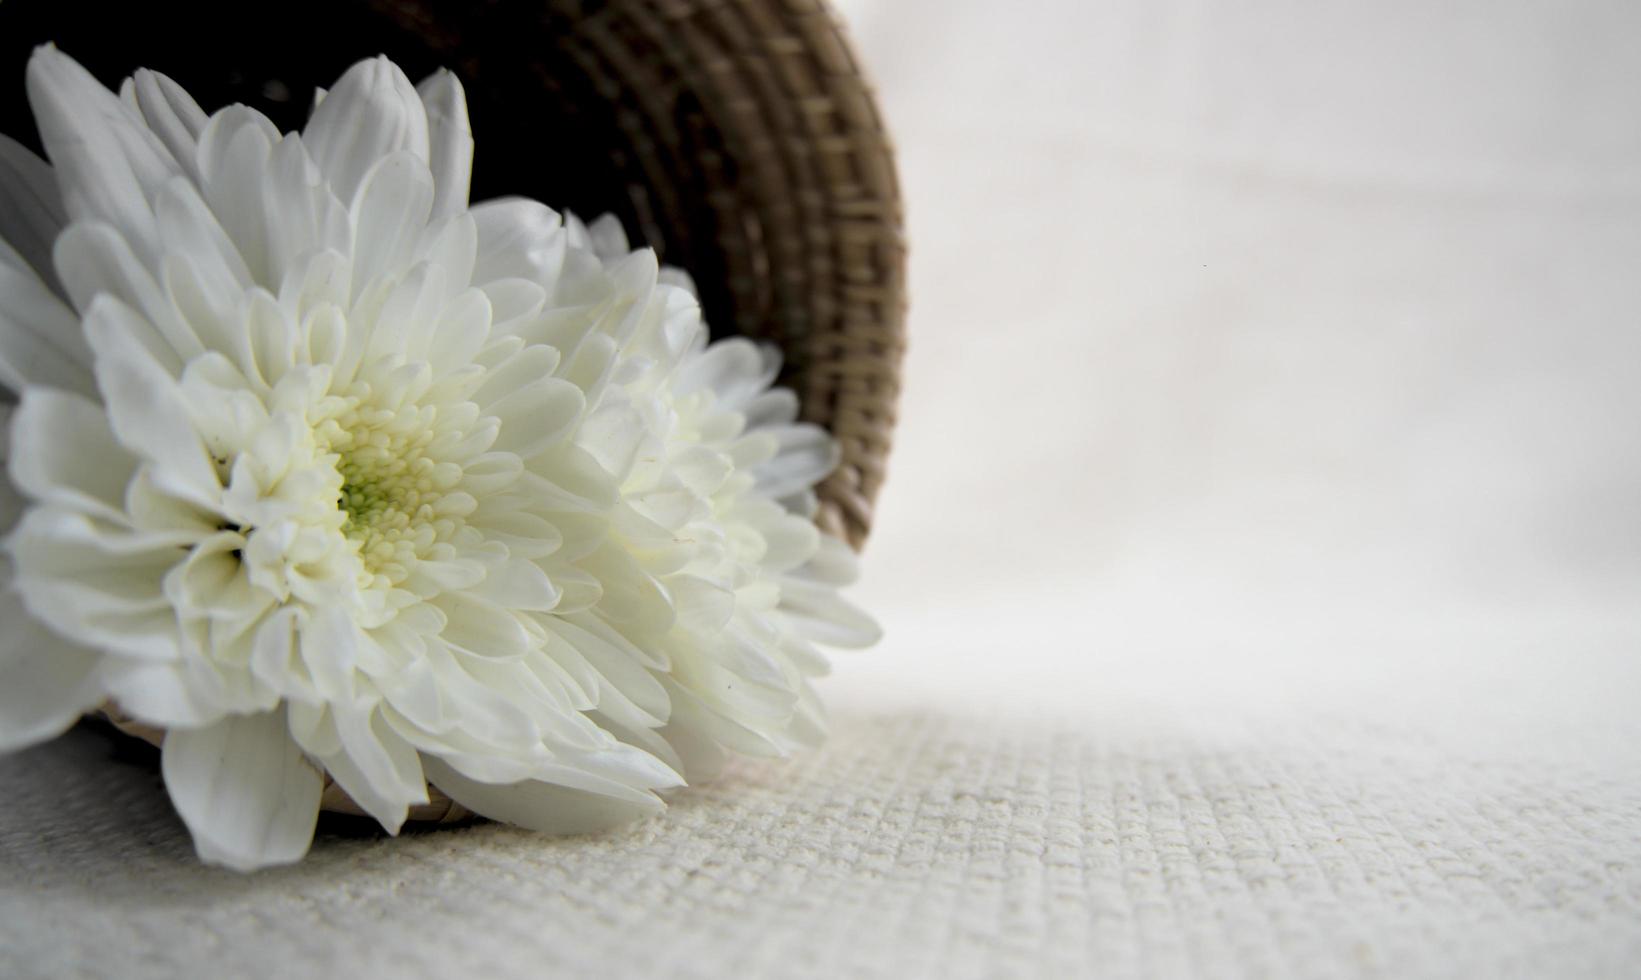 White chrysanthemum flower in wooden basket on white sheet photo